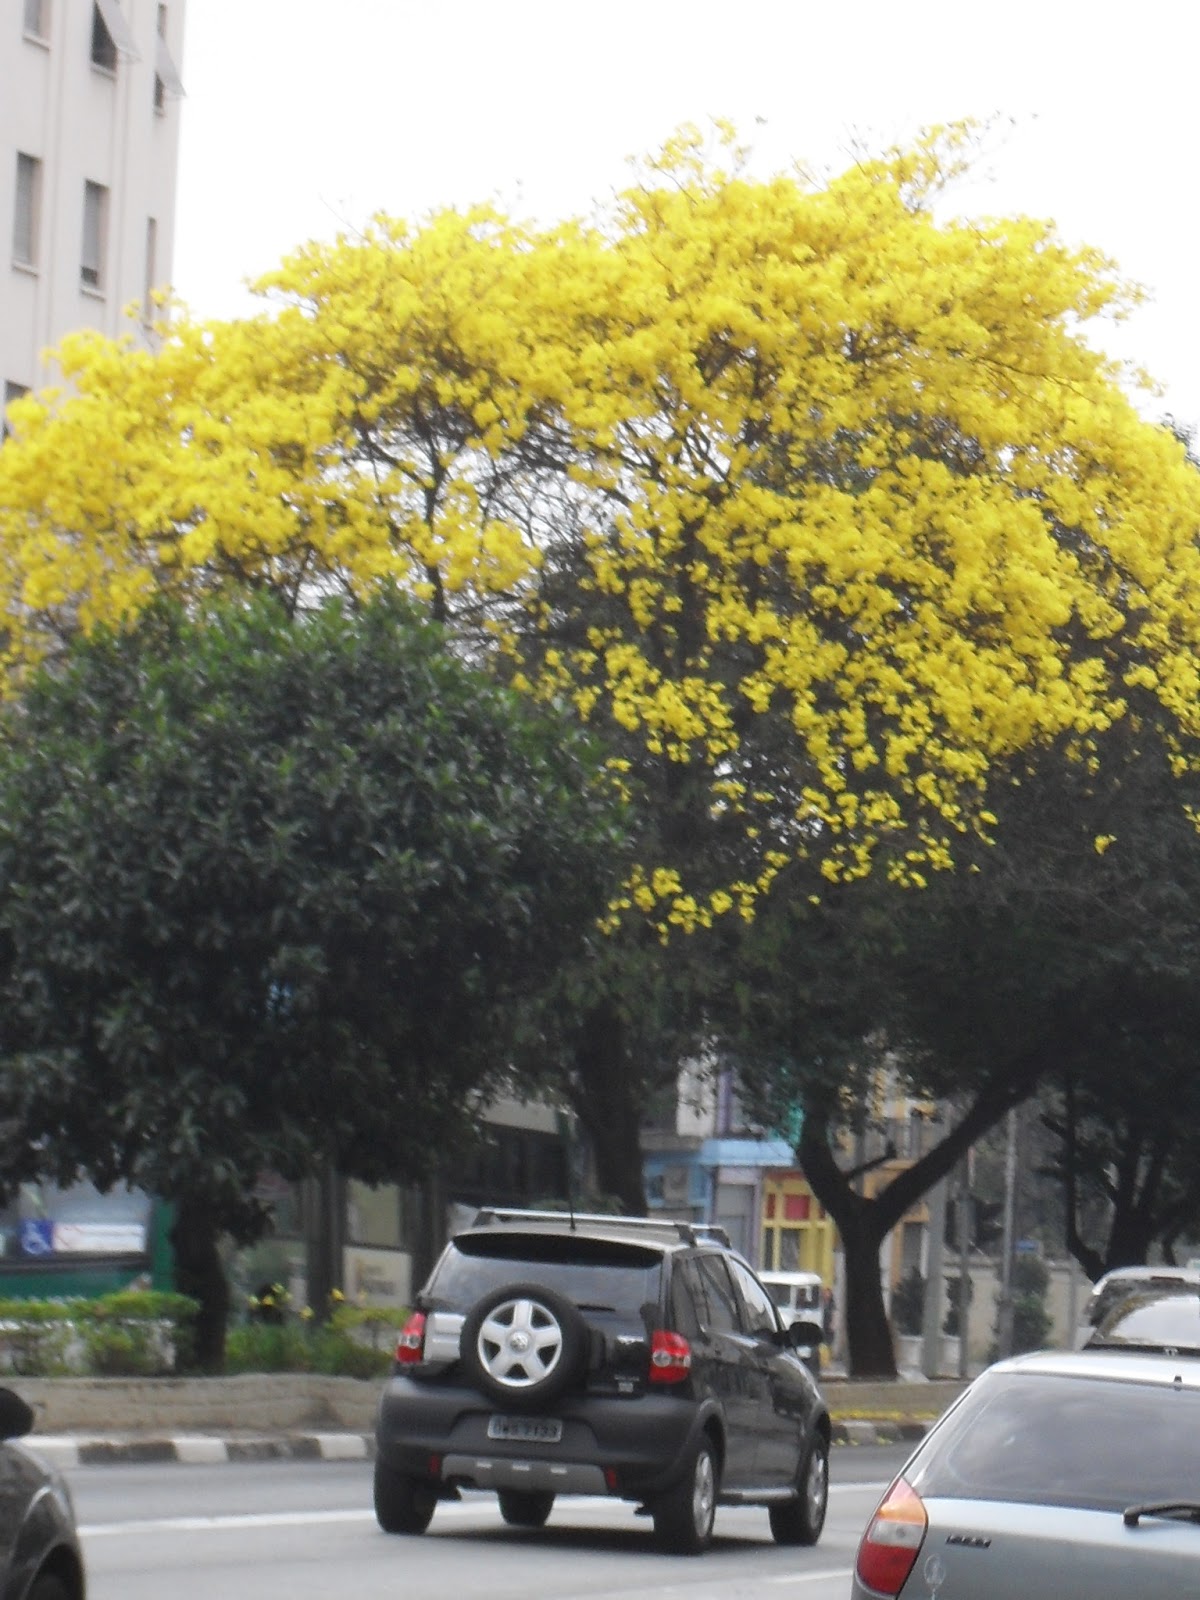 Sabores do Mato - Panc's e plantas medicinais: FLORES COMESTÍVEIS: IPÊ  AMARELO, pau-d'arco-amarelo, Handroanthus chrysotrichus